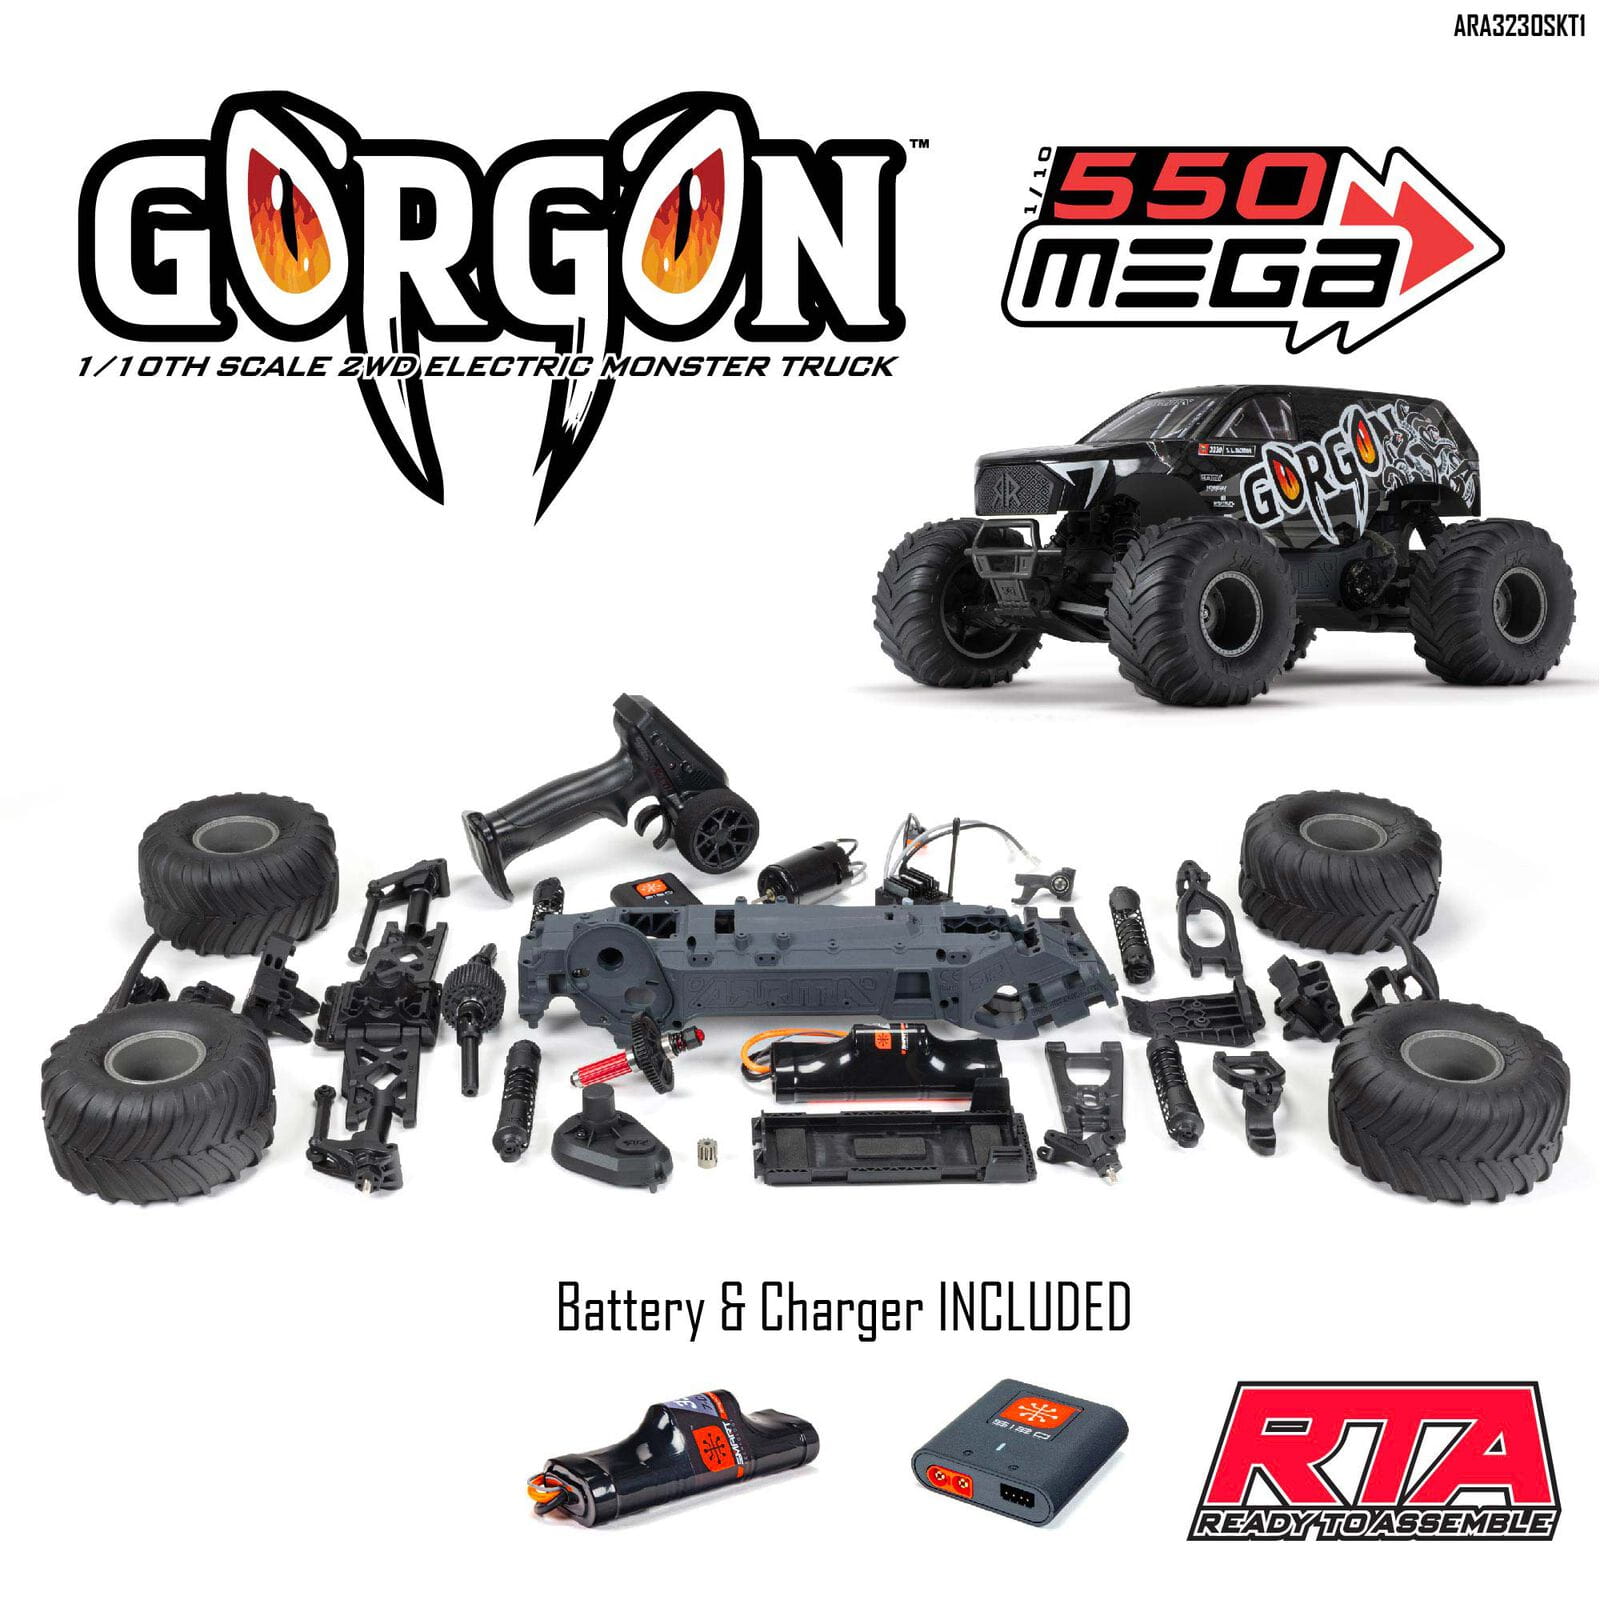 arrma gorgon Mega 550 kit baukasten